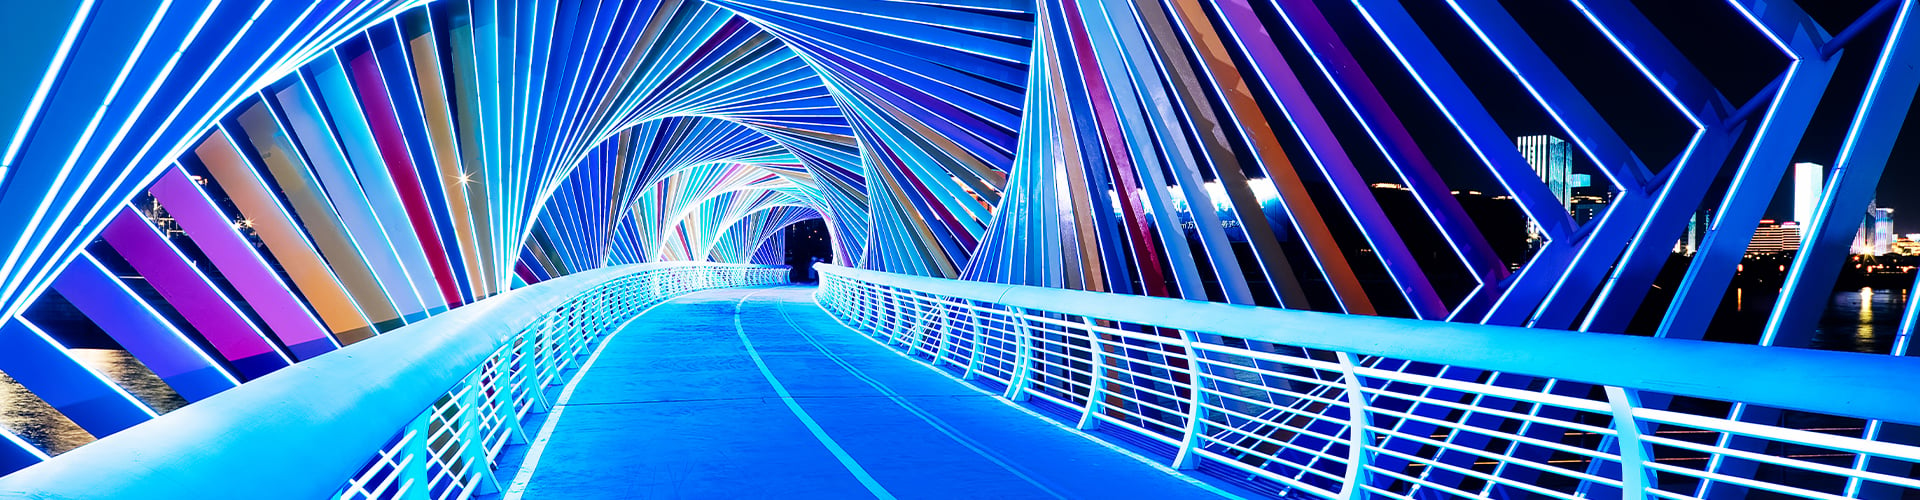 Bridge lit in neon blue